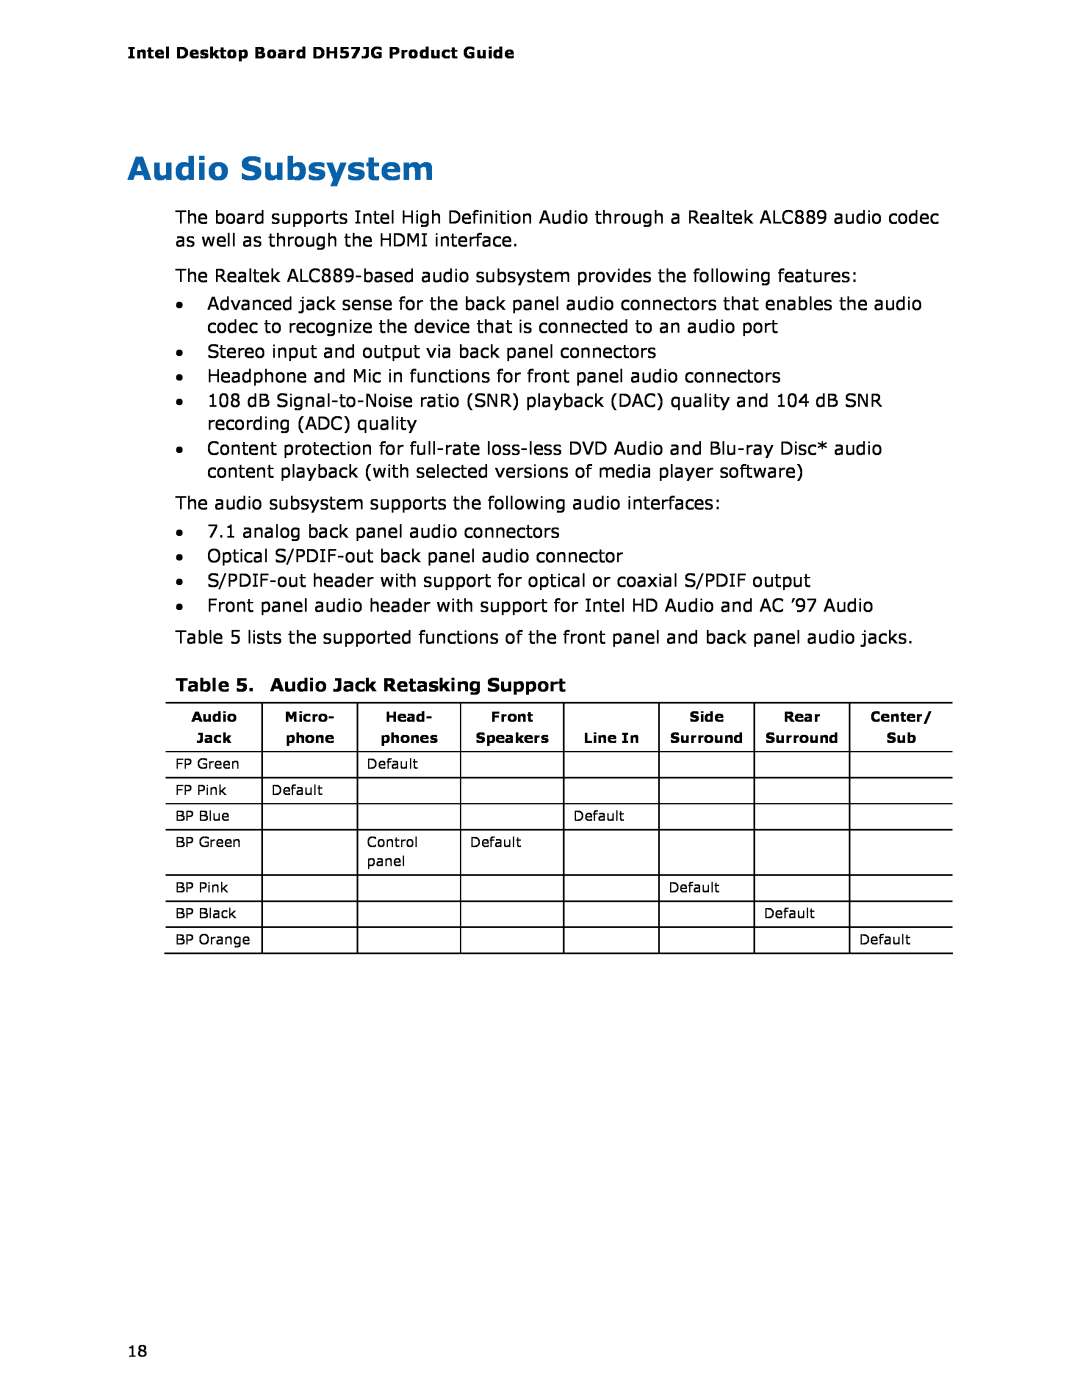 Intel BLKDH57JG manual Audio Subsystem, Audio Jack Retasking Support 